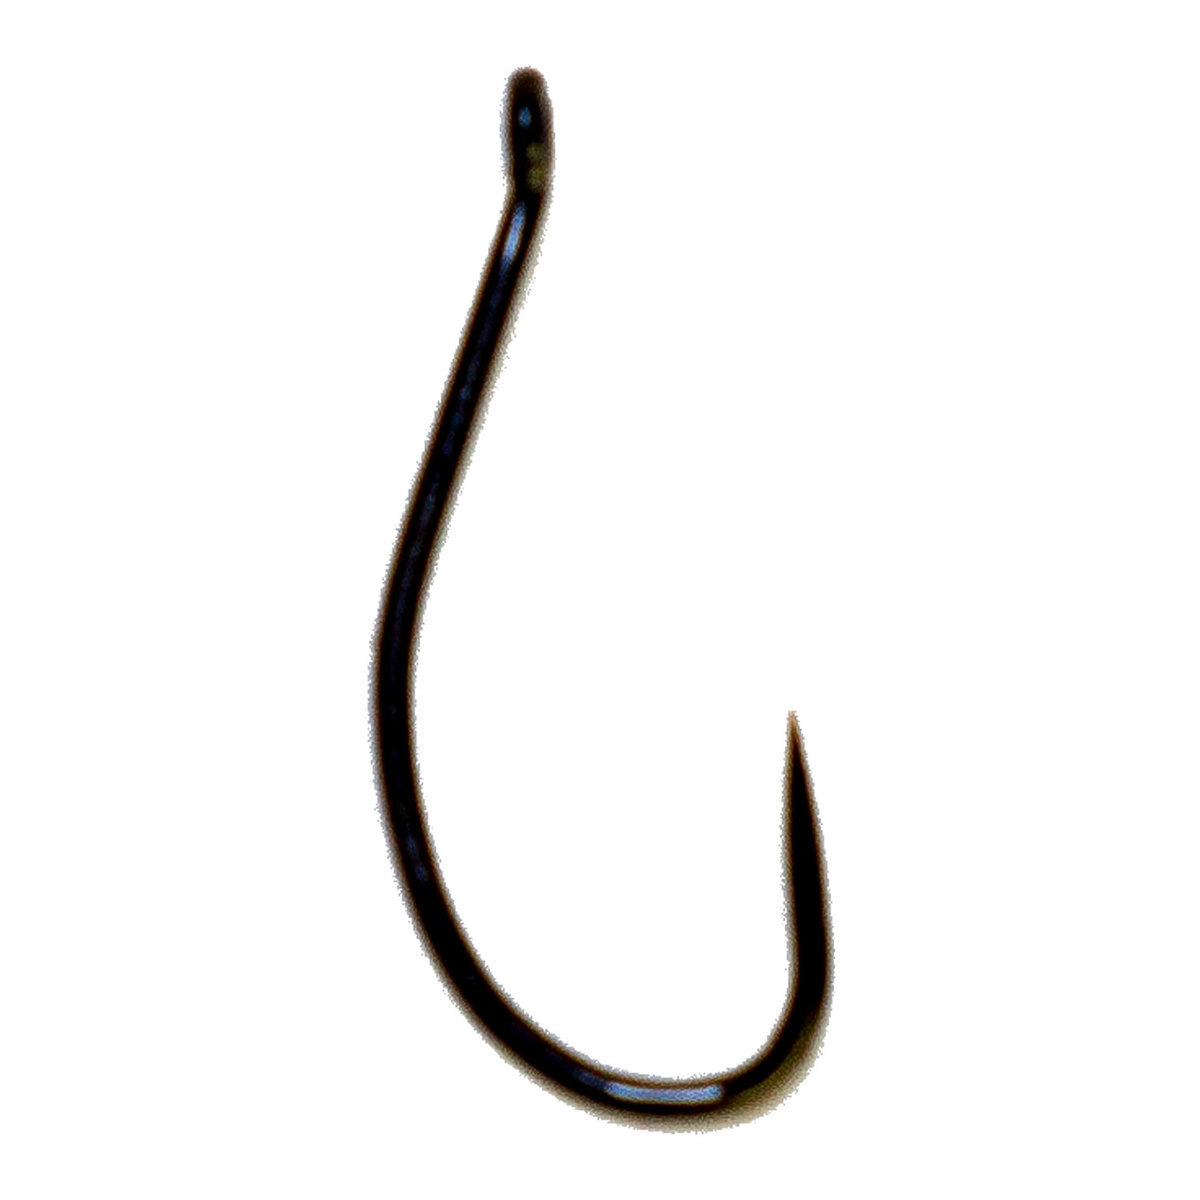 https://www.sportsmans.com/medias/daiichi-1251-premium-fishing-hook-black-size-16-1131649-1.jpg?context=bWFzdGVyfGltYWdlc3w1MjUwMnxpbWFnZS9qcGVnfGltYWdlcy9oYWMvaDE0LzkwMzY5NjE1MTM1MDIuanBnfDQwM2E1OTdkMTg5NmQyN2M1YTgxZWNmZGMxNDU1NWE5NzQ4MmExYWY5ODk5MGVjYzEwMzVkYzhlOGI1OWFmNGE